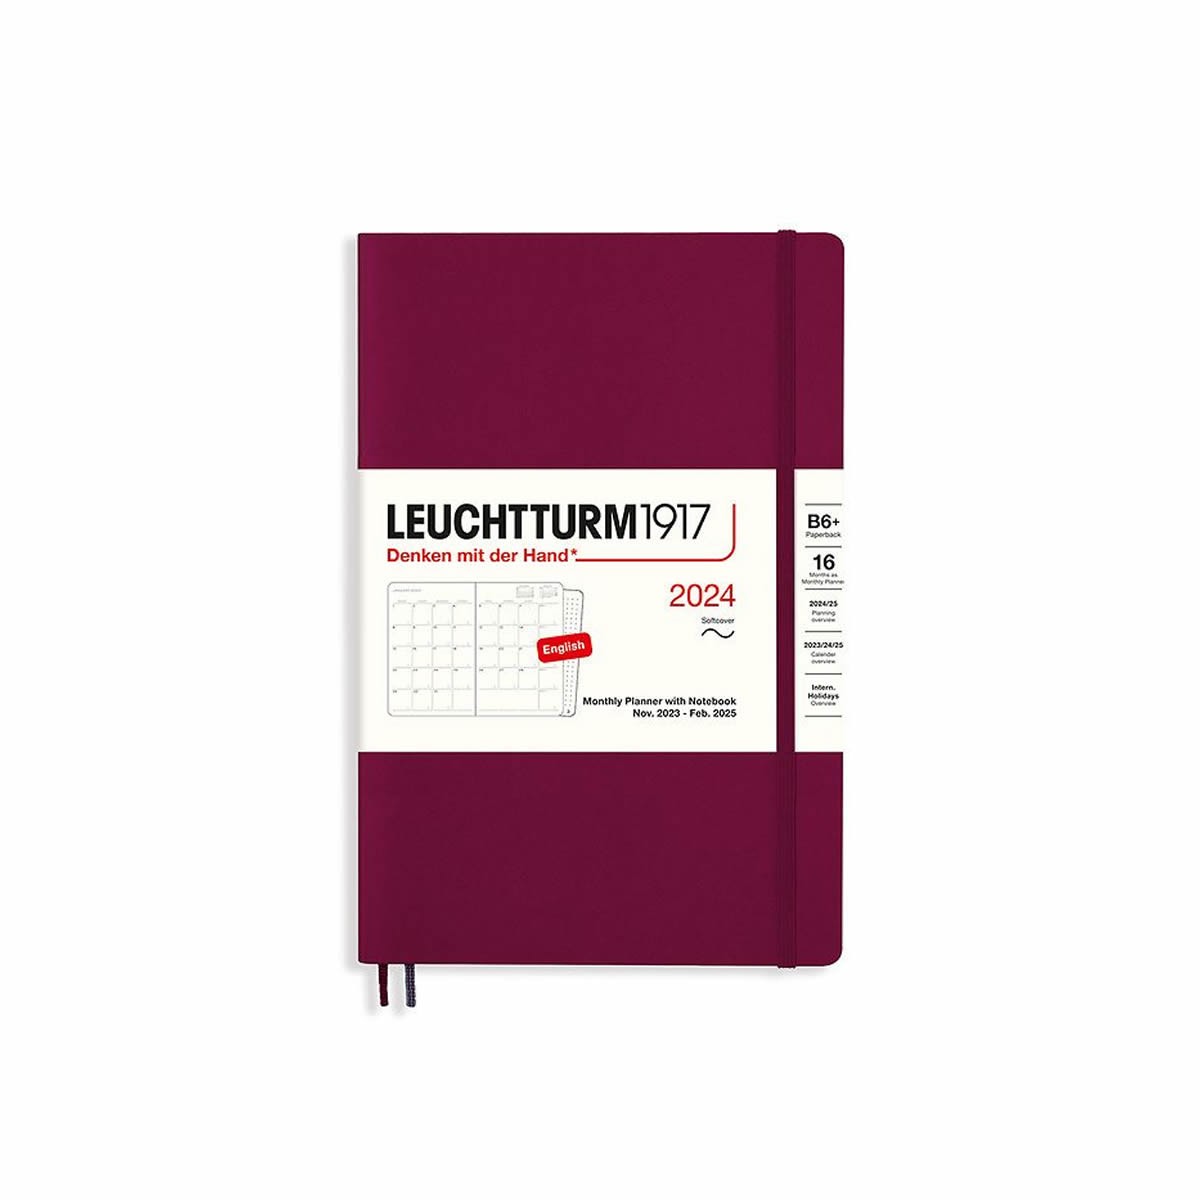 LEUCHTTURM1917 Μηνιαίο Planner/Notebook 2024 B6+ με Μαλακό Εξώφυλλο Port Red